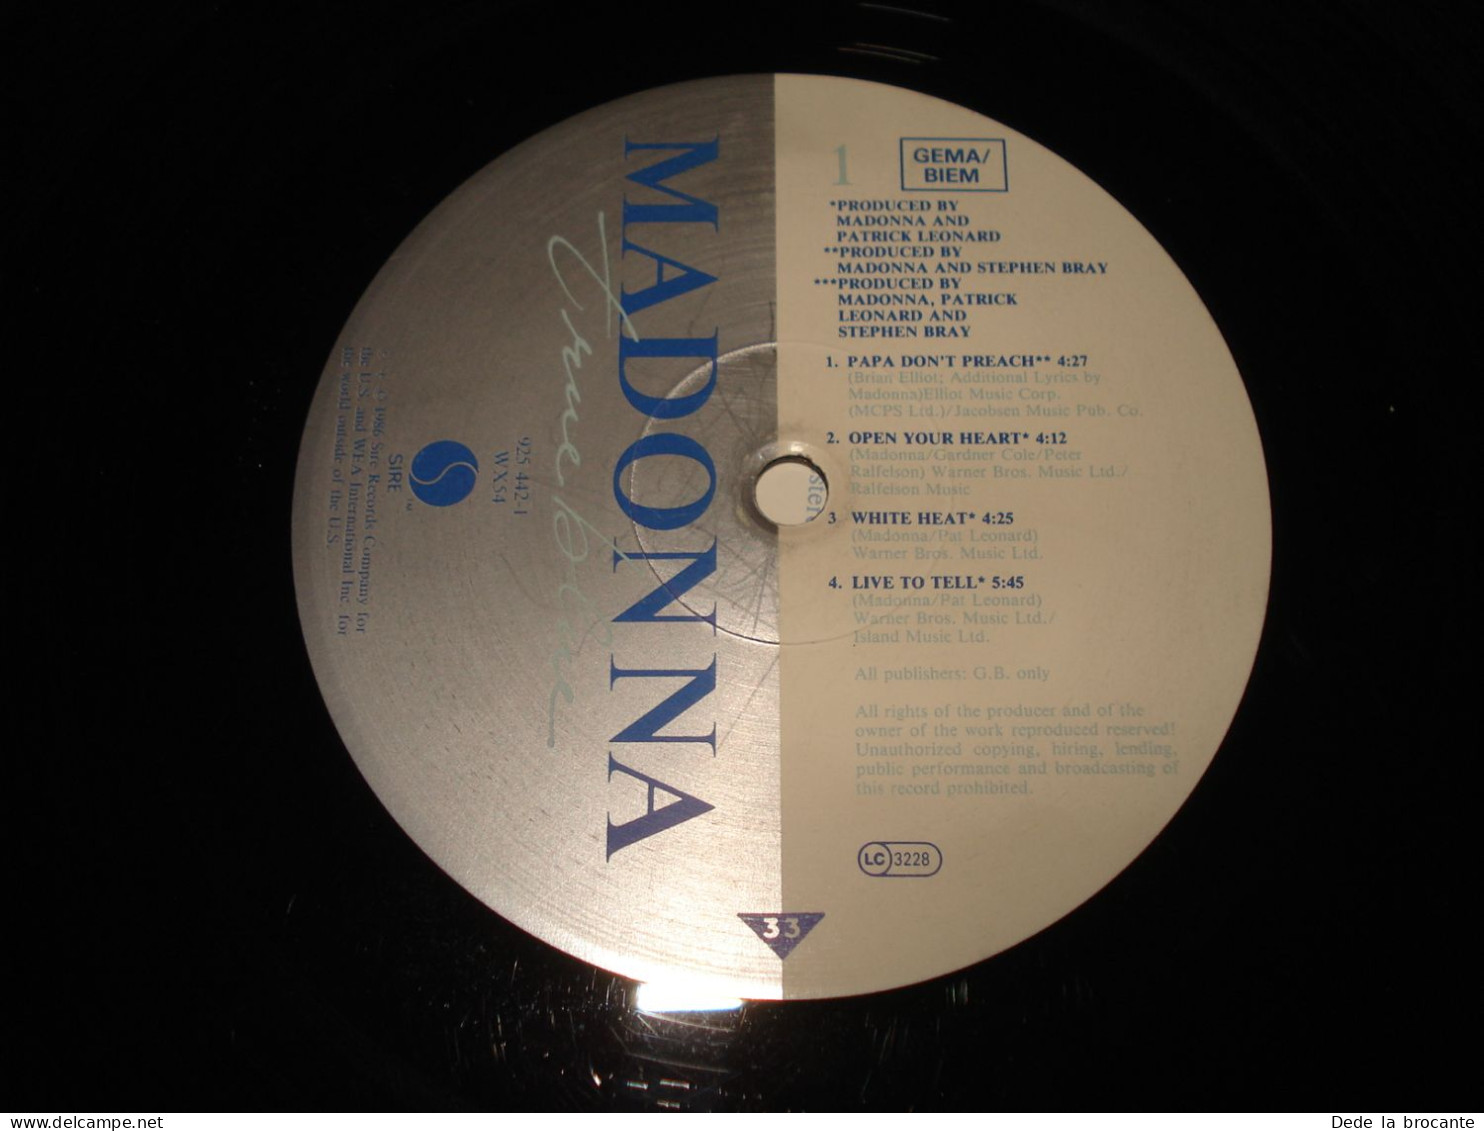 B12 / Madonna – True Blue - LP - Sire – 925 442 1 - Germany 1986  VG+/G - Disco, Pop